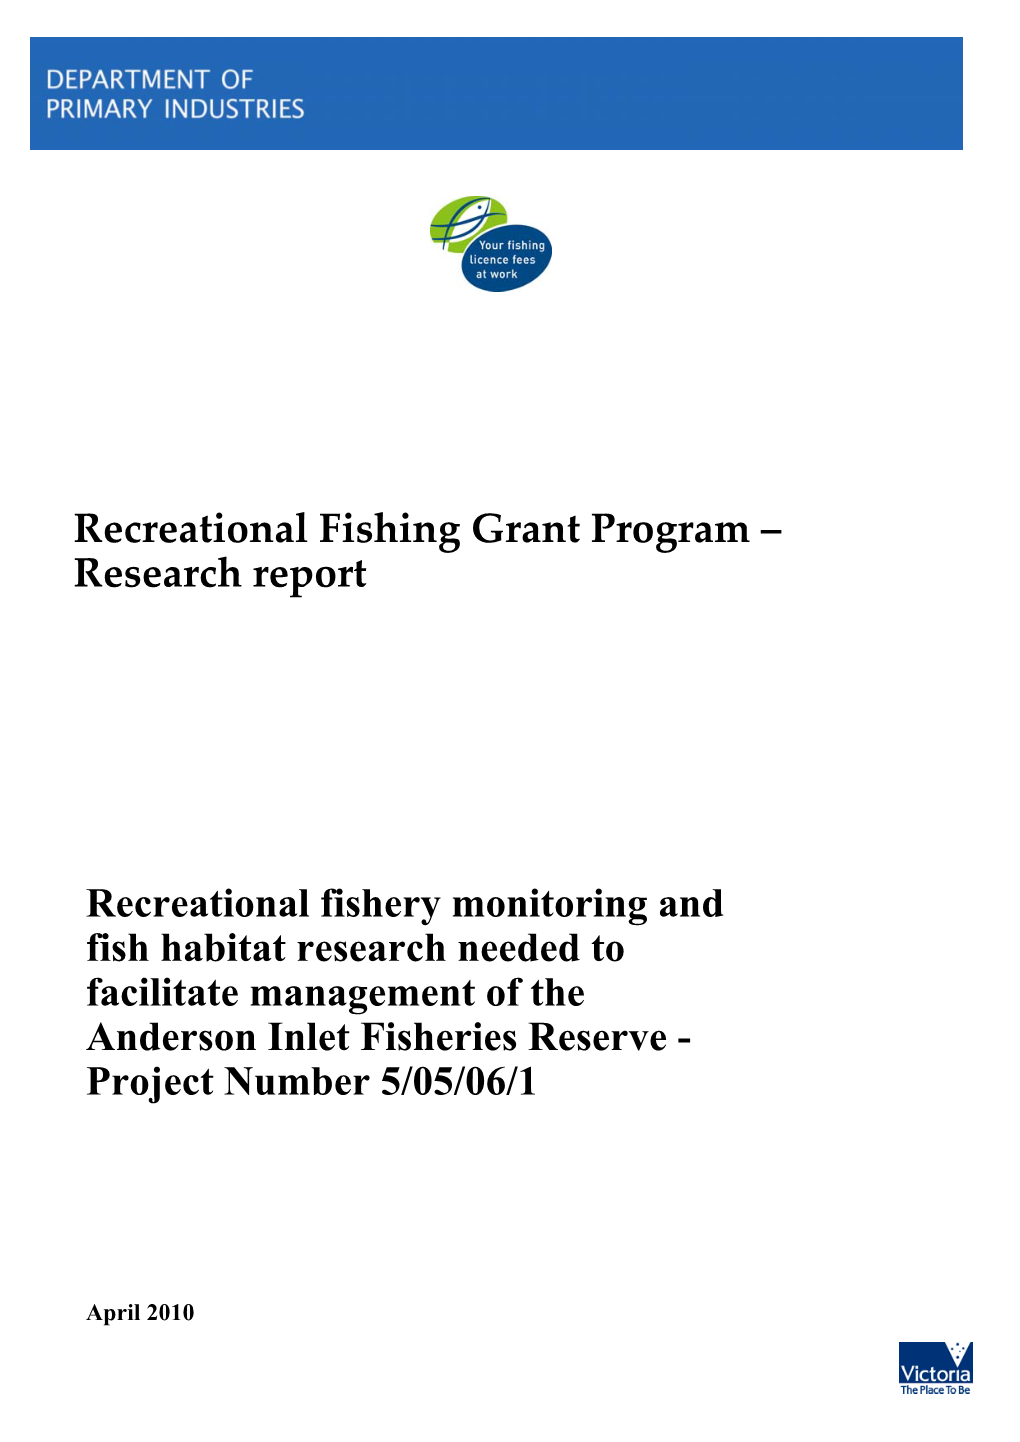 Recreational Fishing Grant Program – Research Report